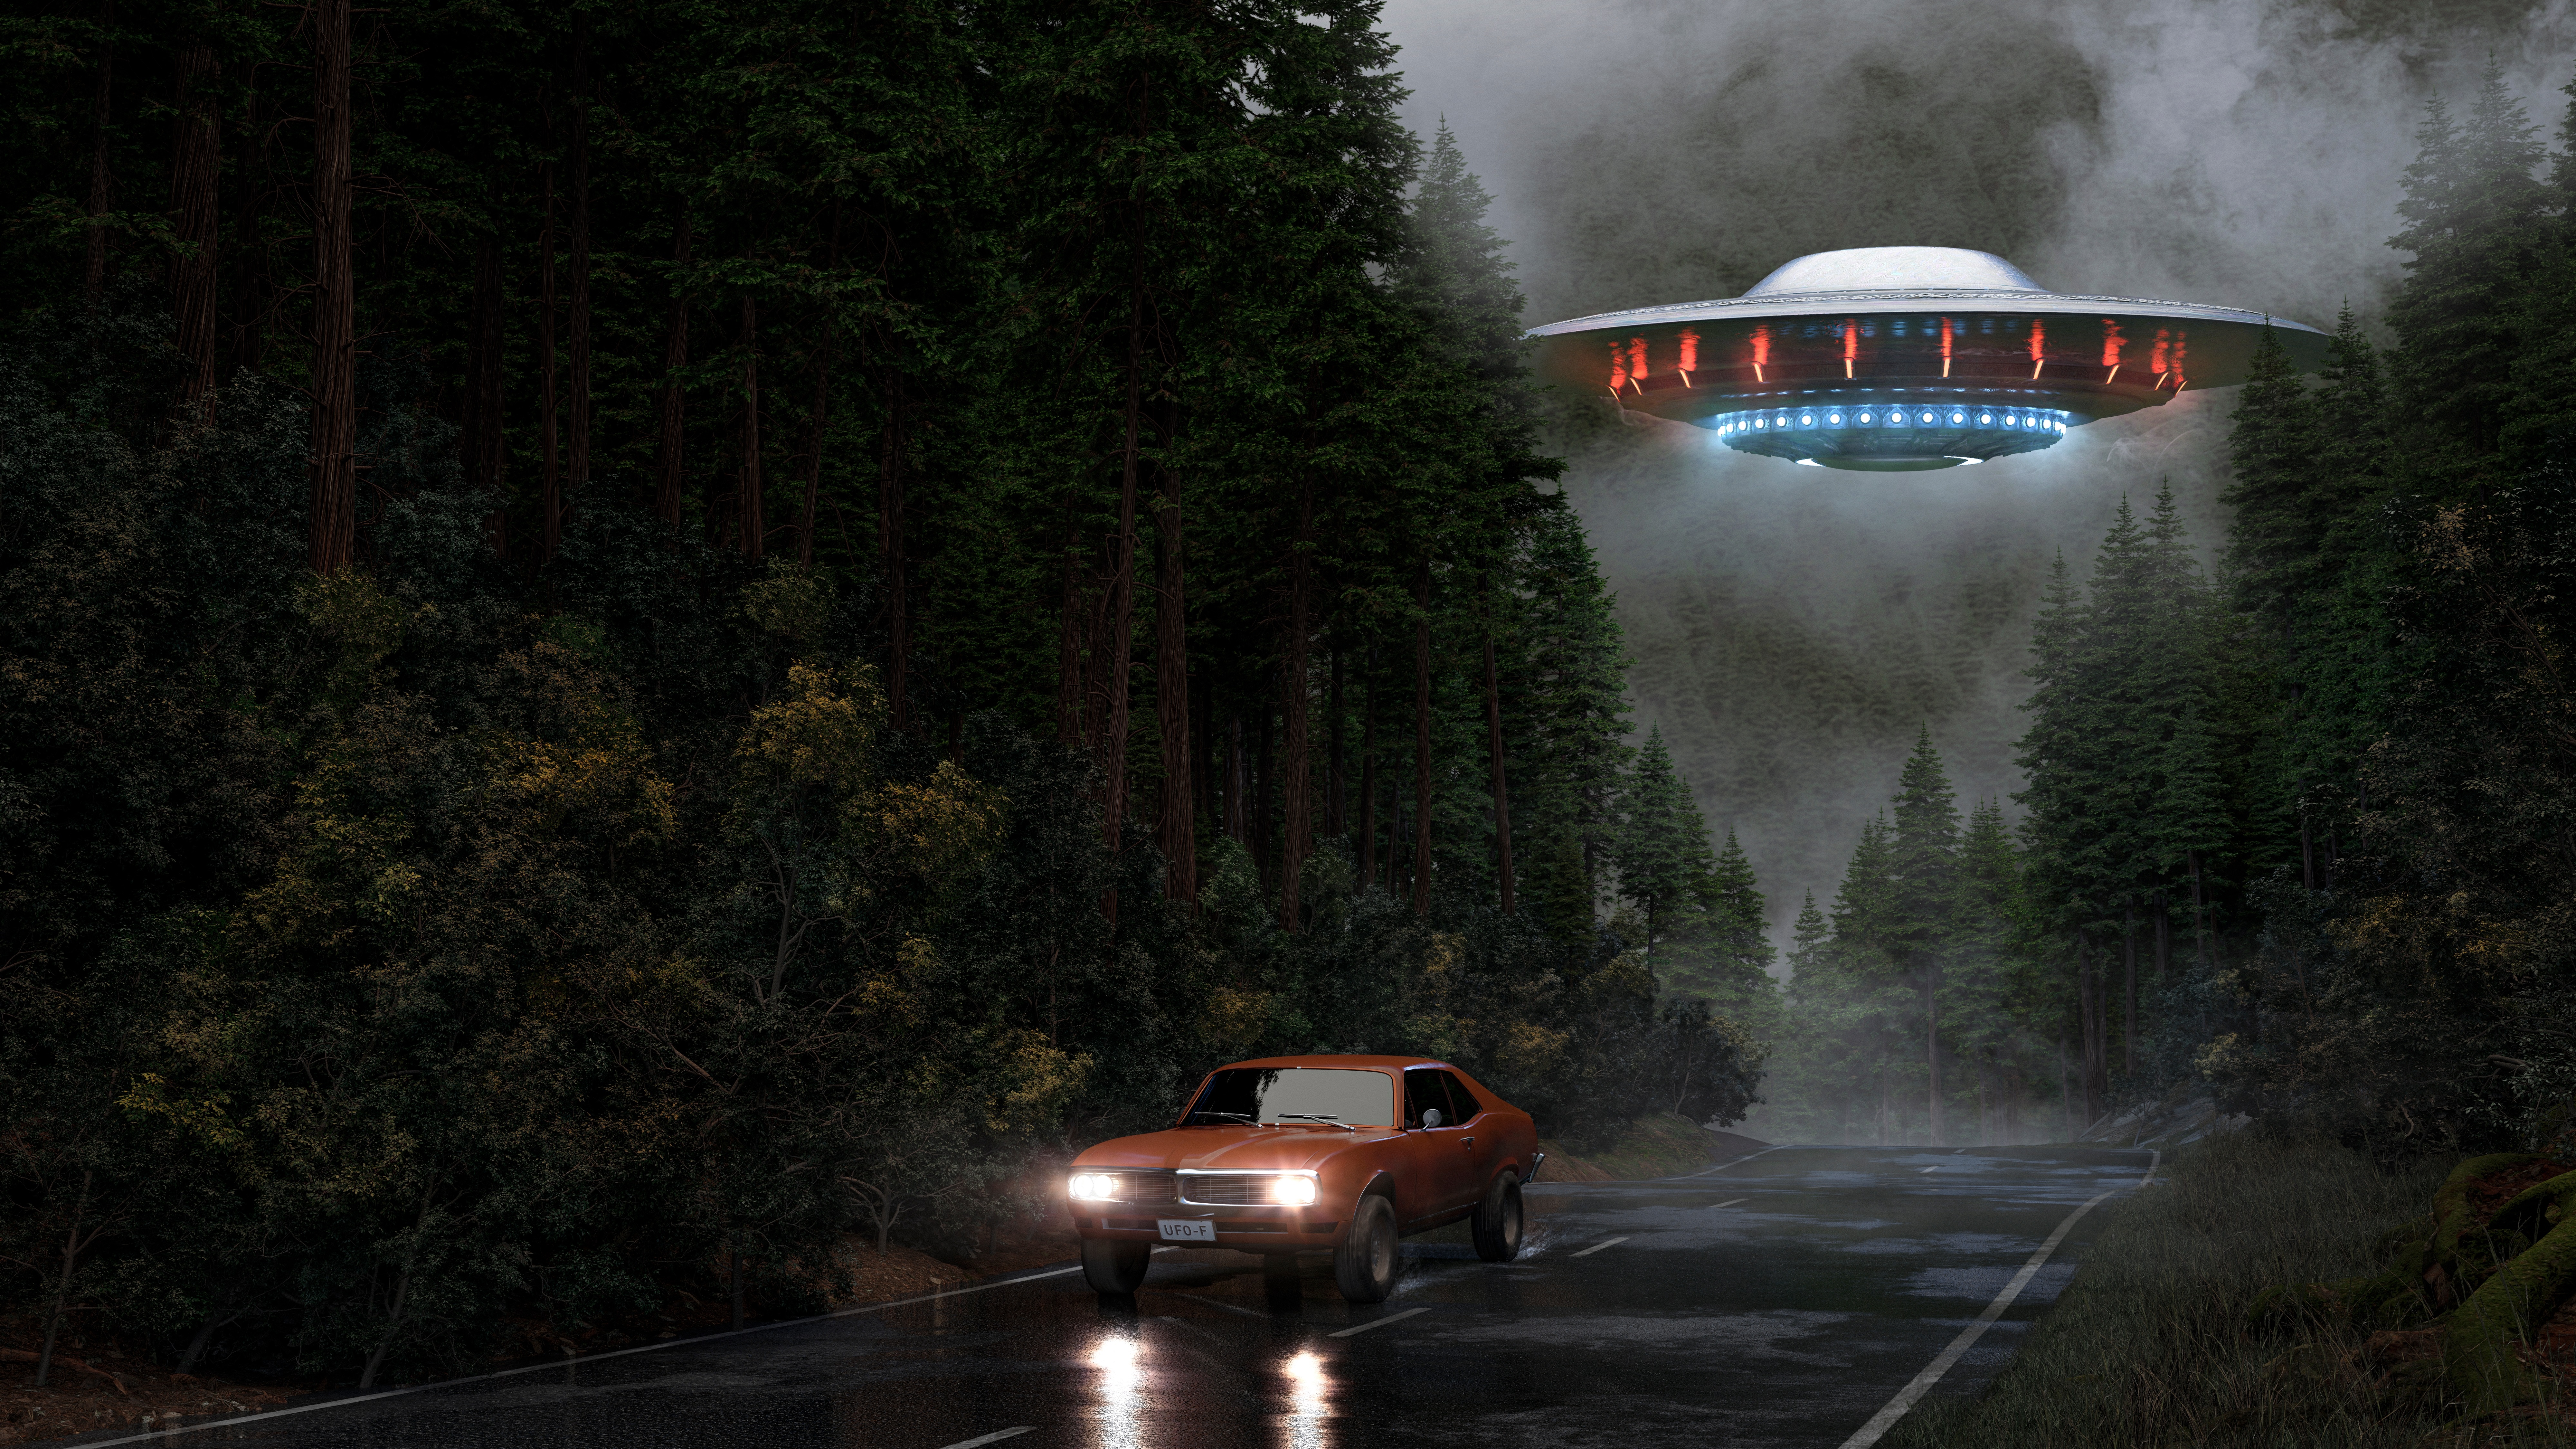 General 8000x4500 road spaceship car forest flying mist rain artwork futuristic science fiction lights vehicle UFO digital art